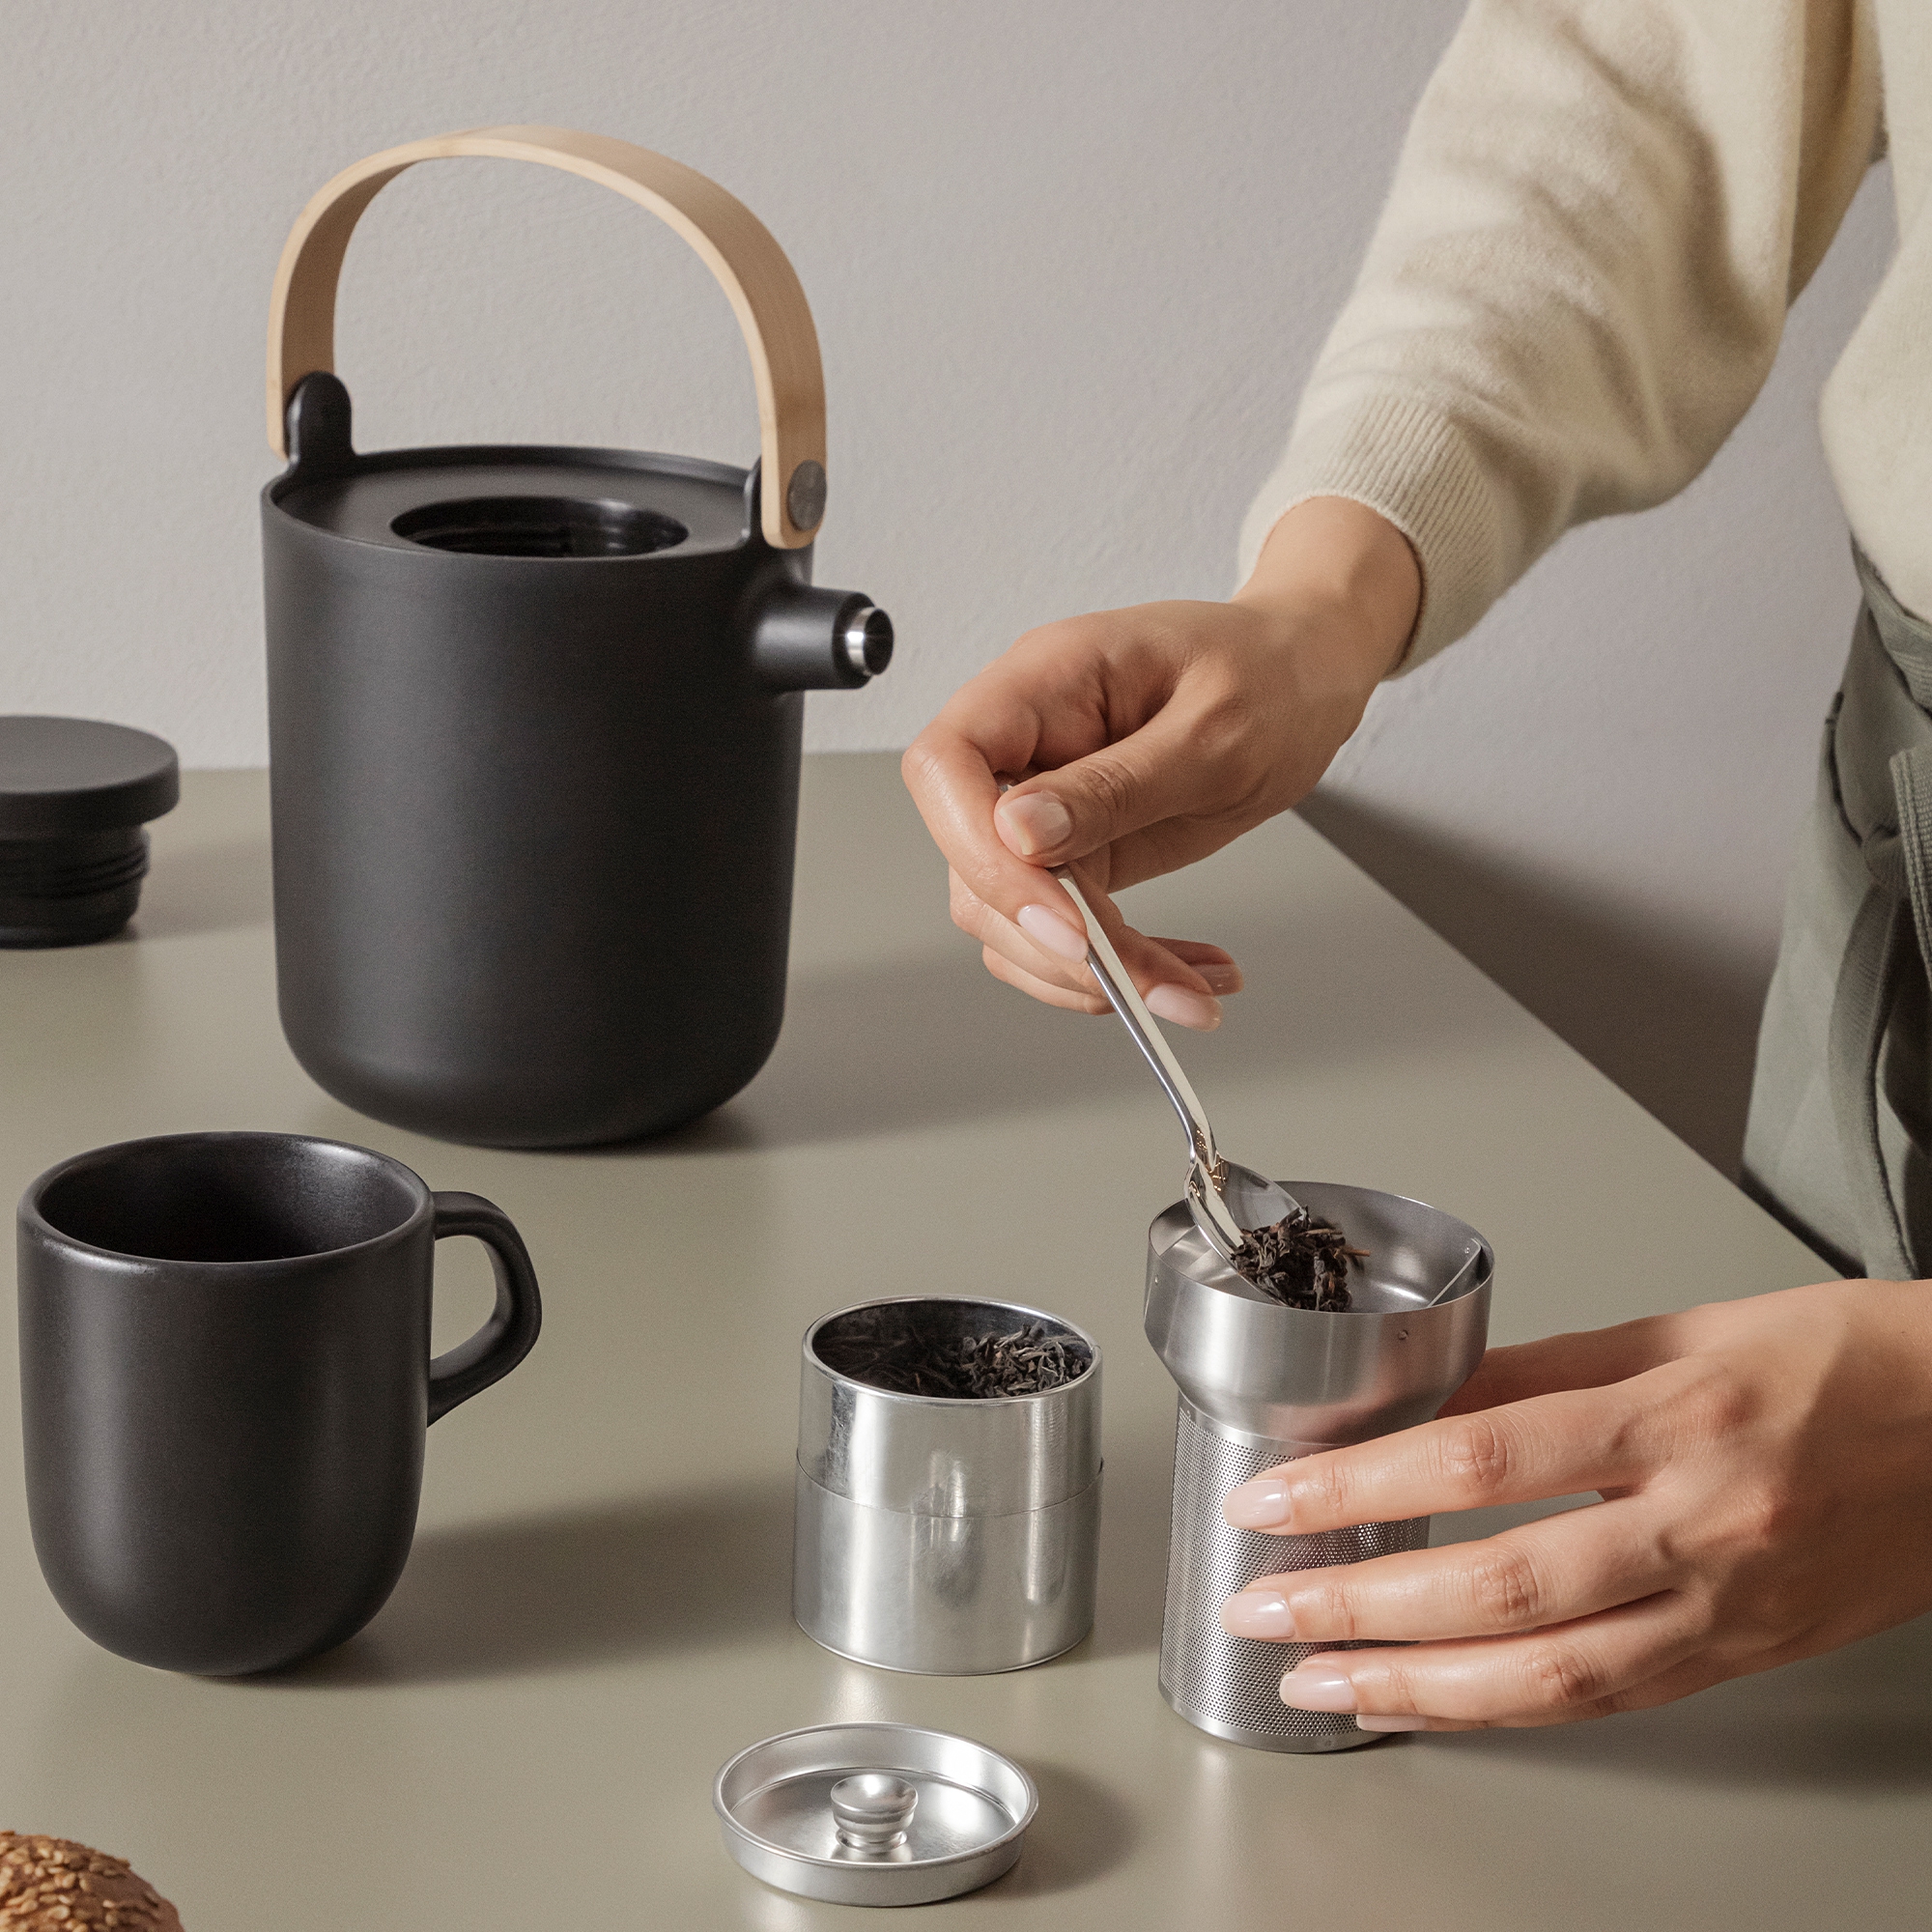 Eva Solo - Tea thermos jug - Nordic kitchen